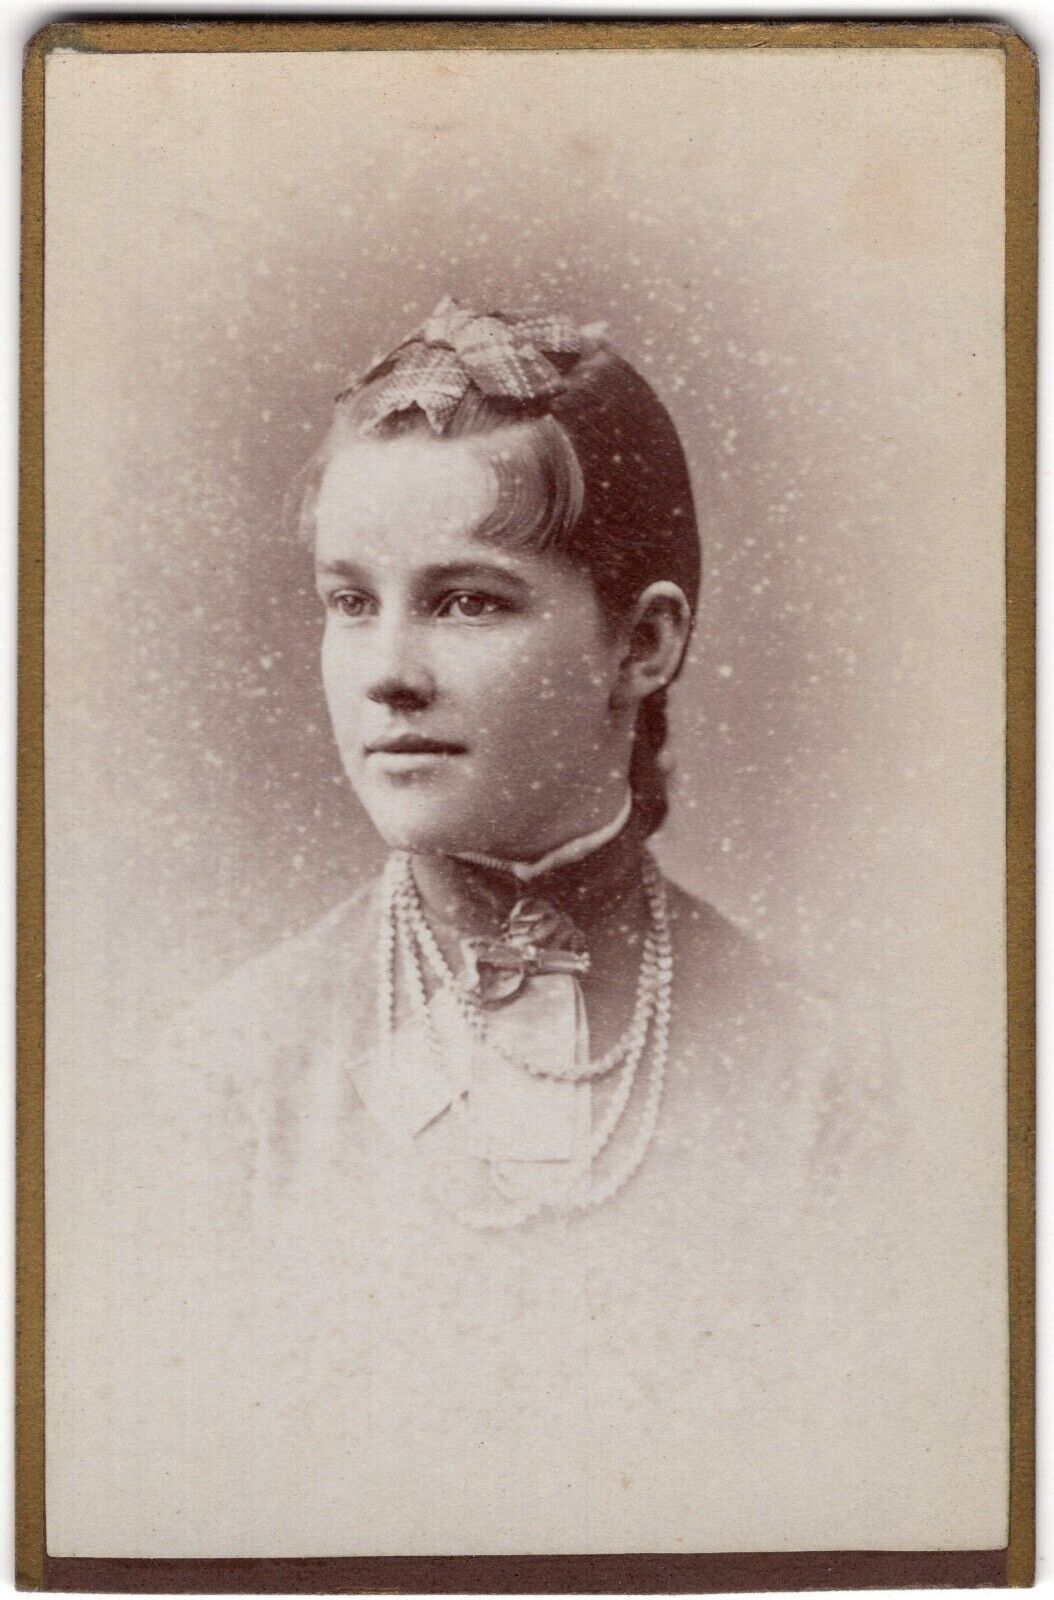 CIRCA 1880s CDV TEENAGE GIRL IN FANCY DRESS WEARING PEARLS UNMARKED